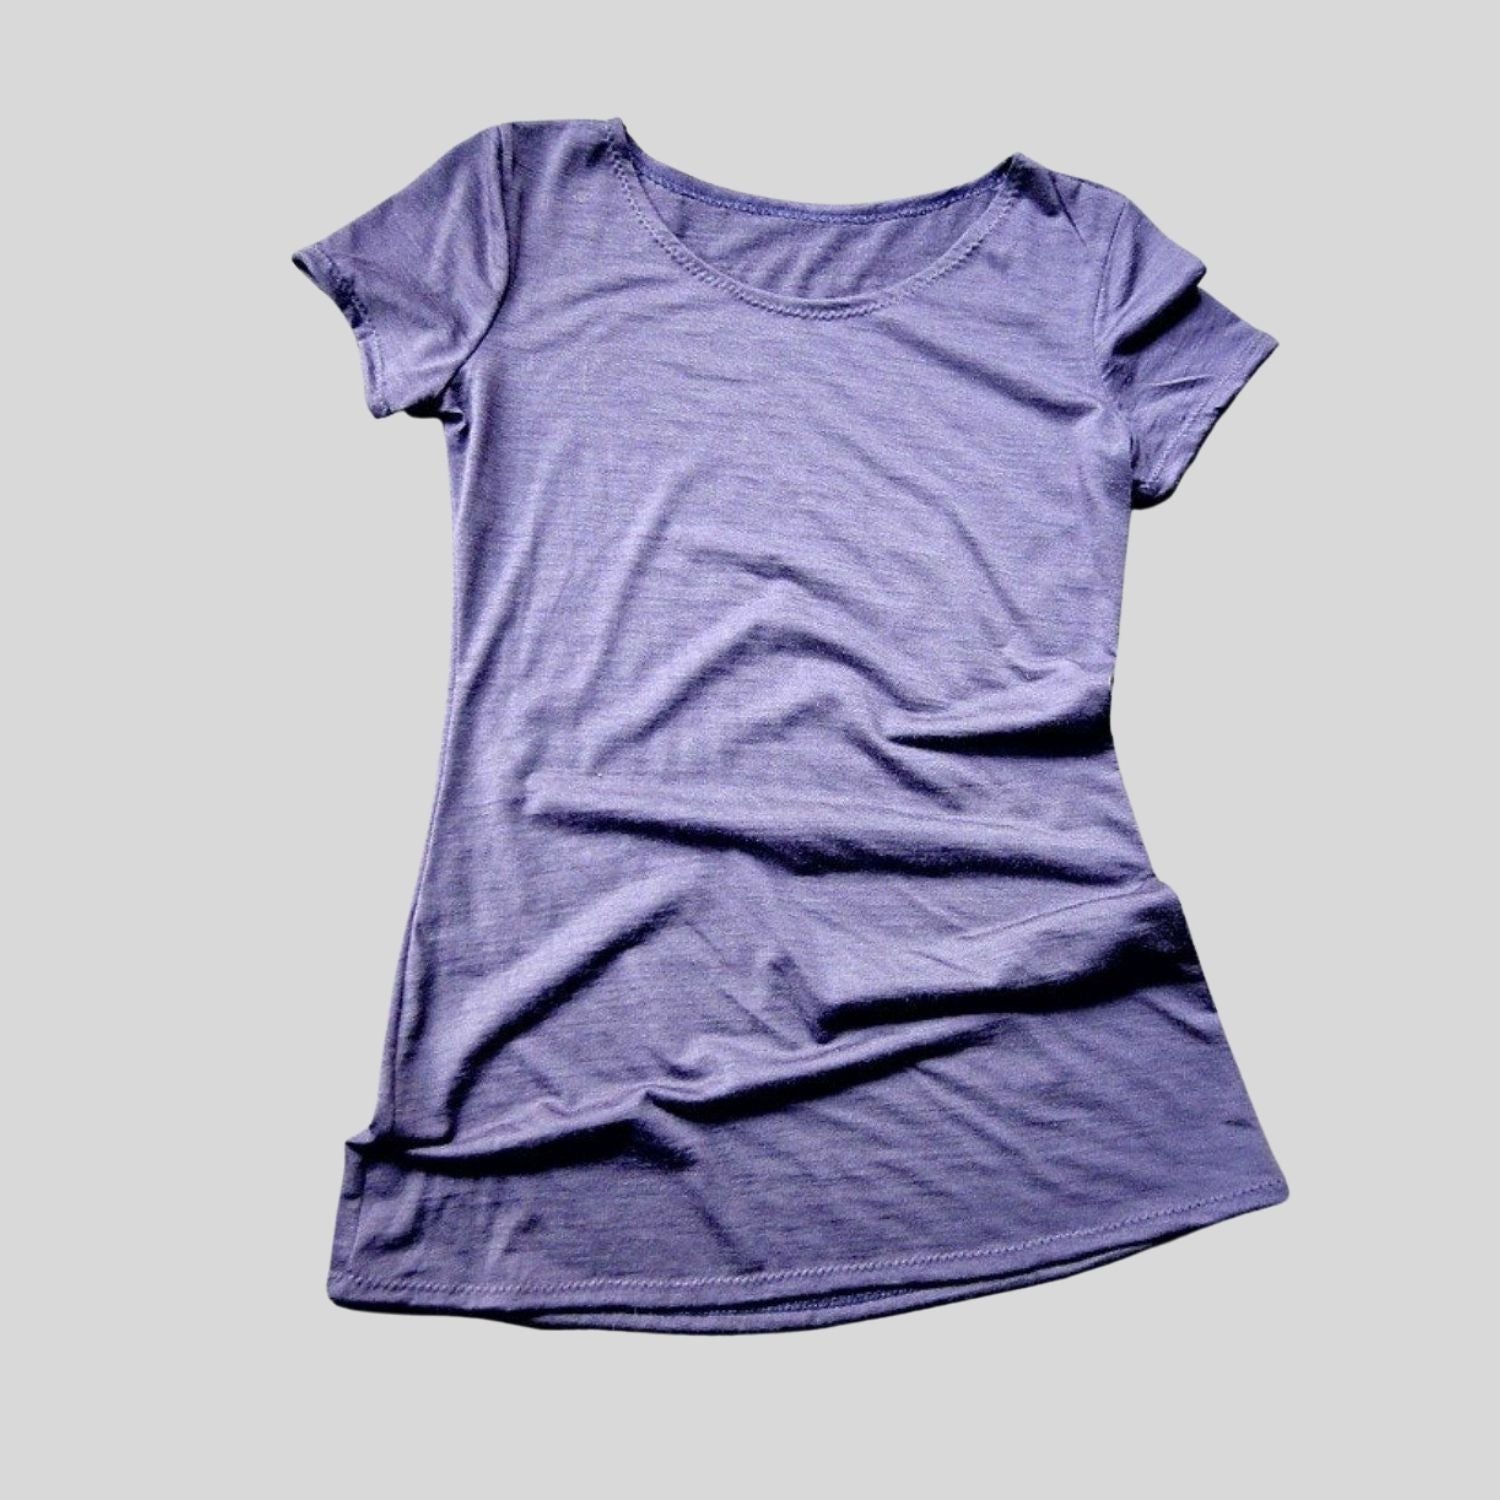 Women's wool t-shirt | Buy merino wool tops for women made in Canada ...